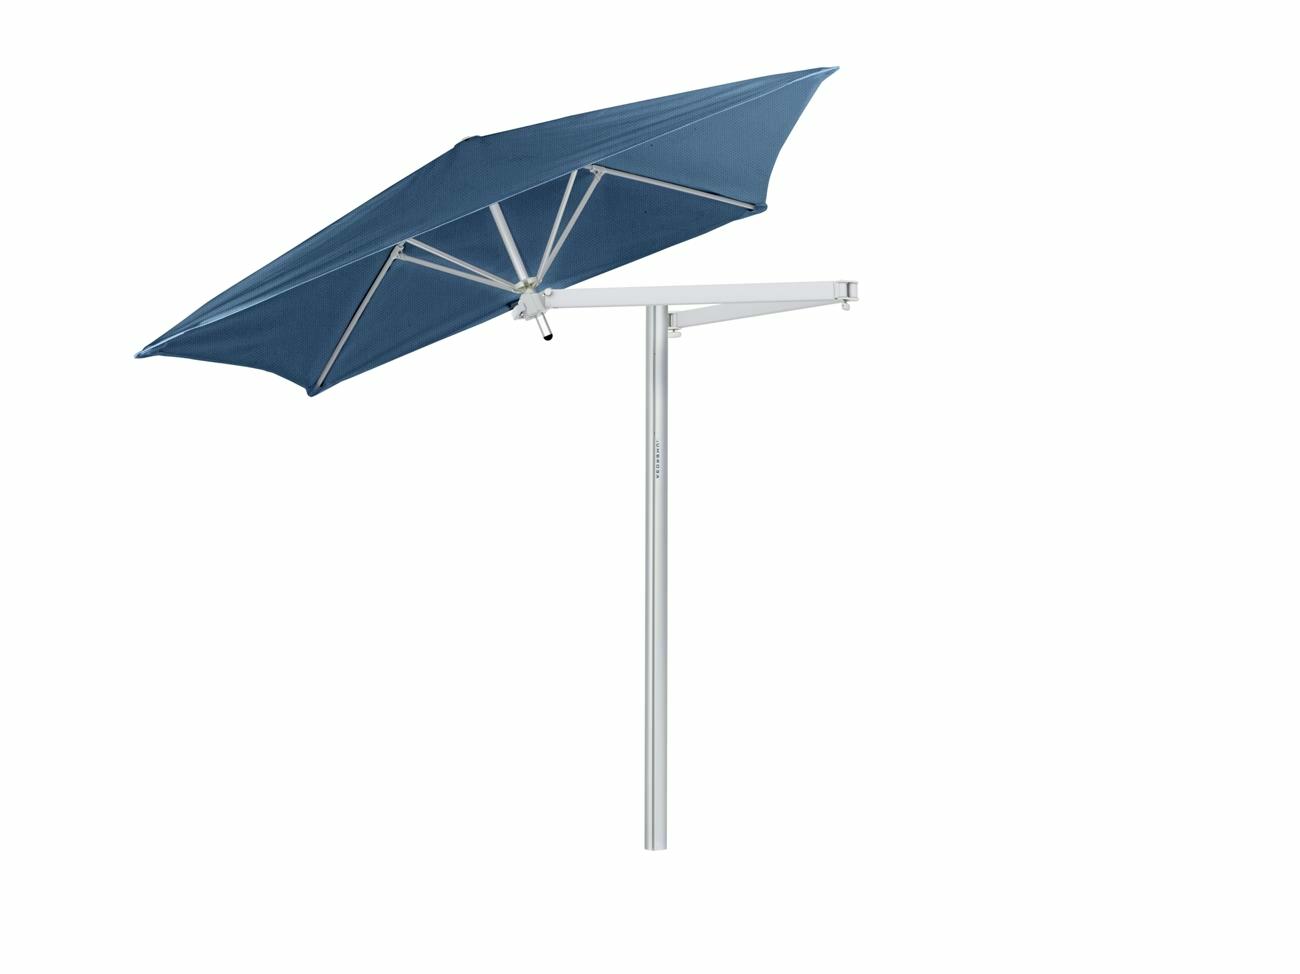 Paraflex cantilever umbrella square 1,9 m with Blue Storm fabric and a Neo arm